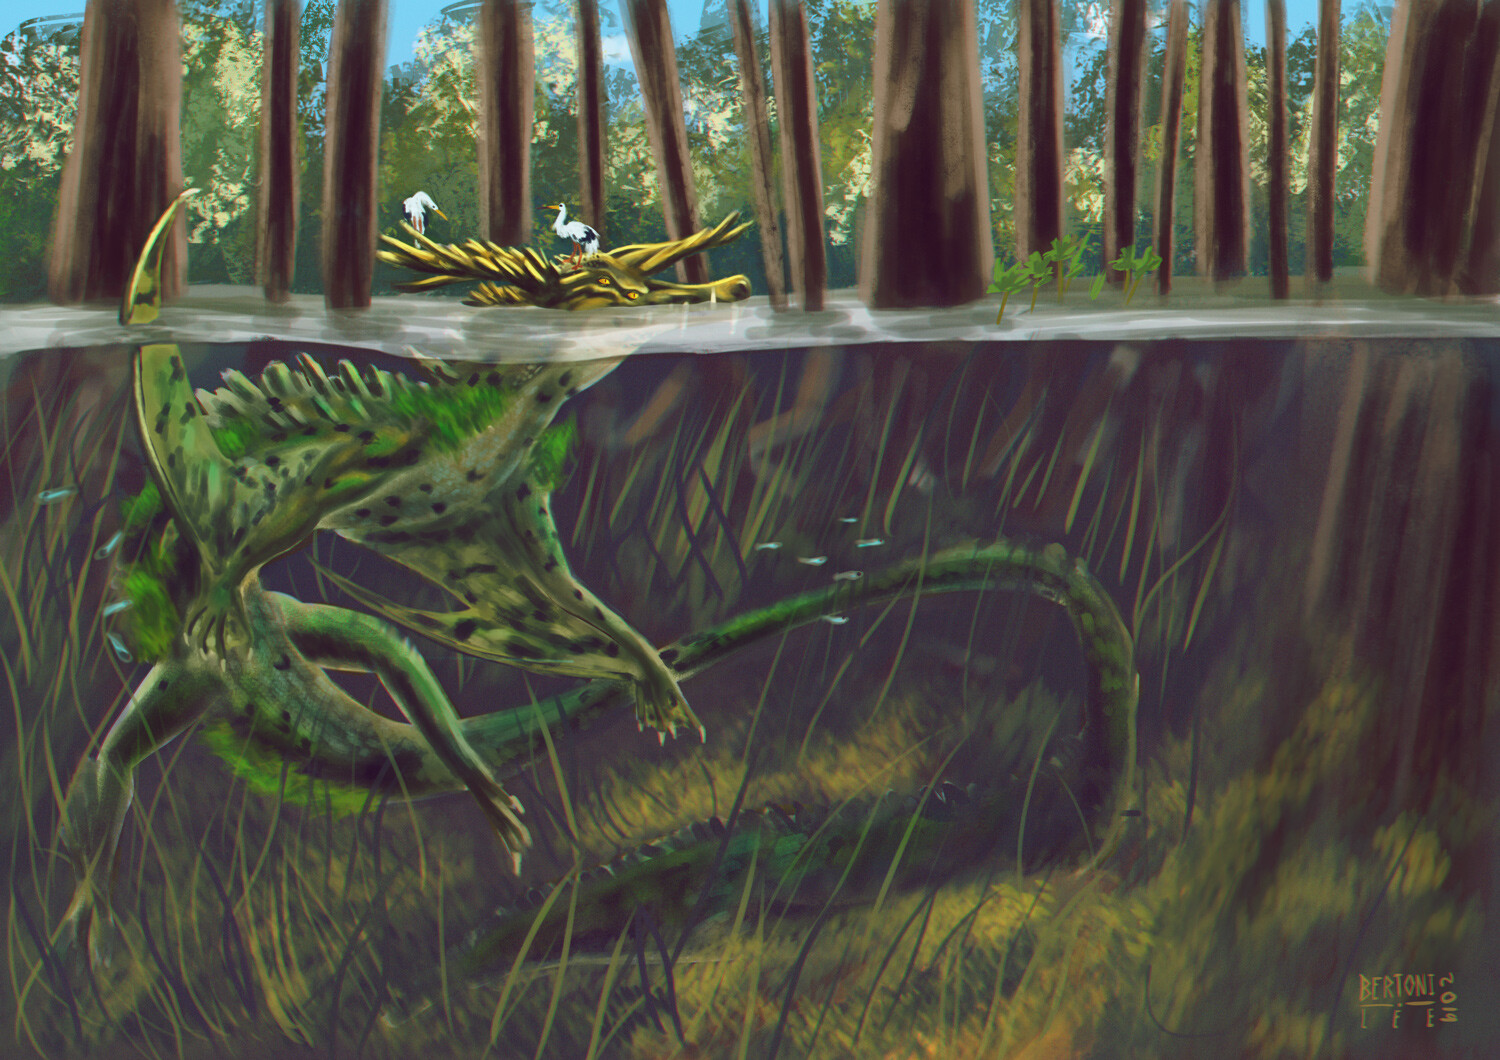 ArtStation - The Dragon Swamps